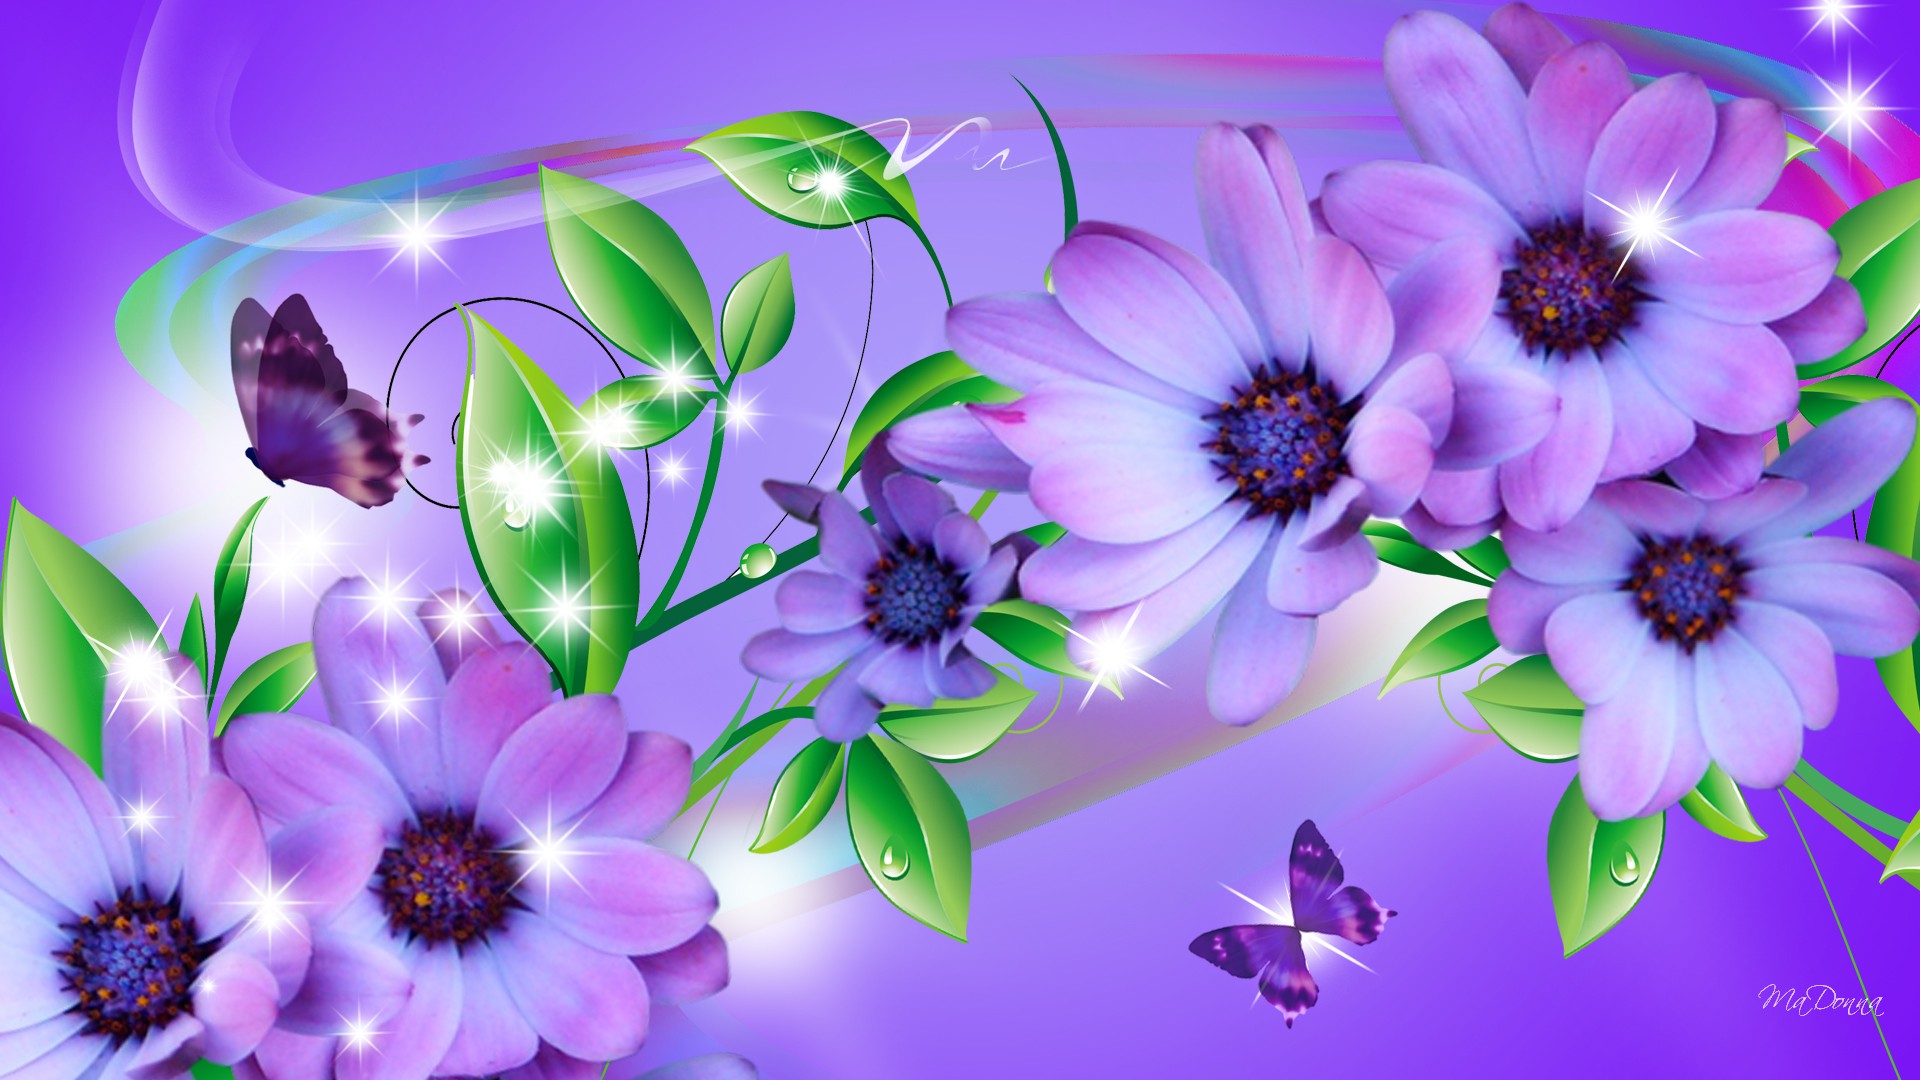 butterfly, purple, daisy, flowers, flower, leaf, artistic High Definition image